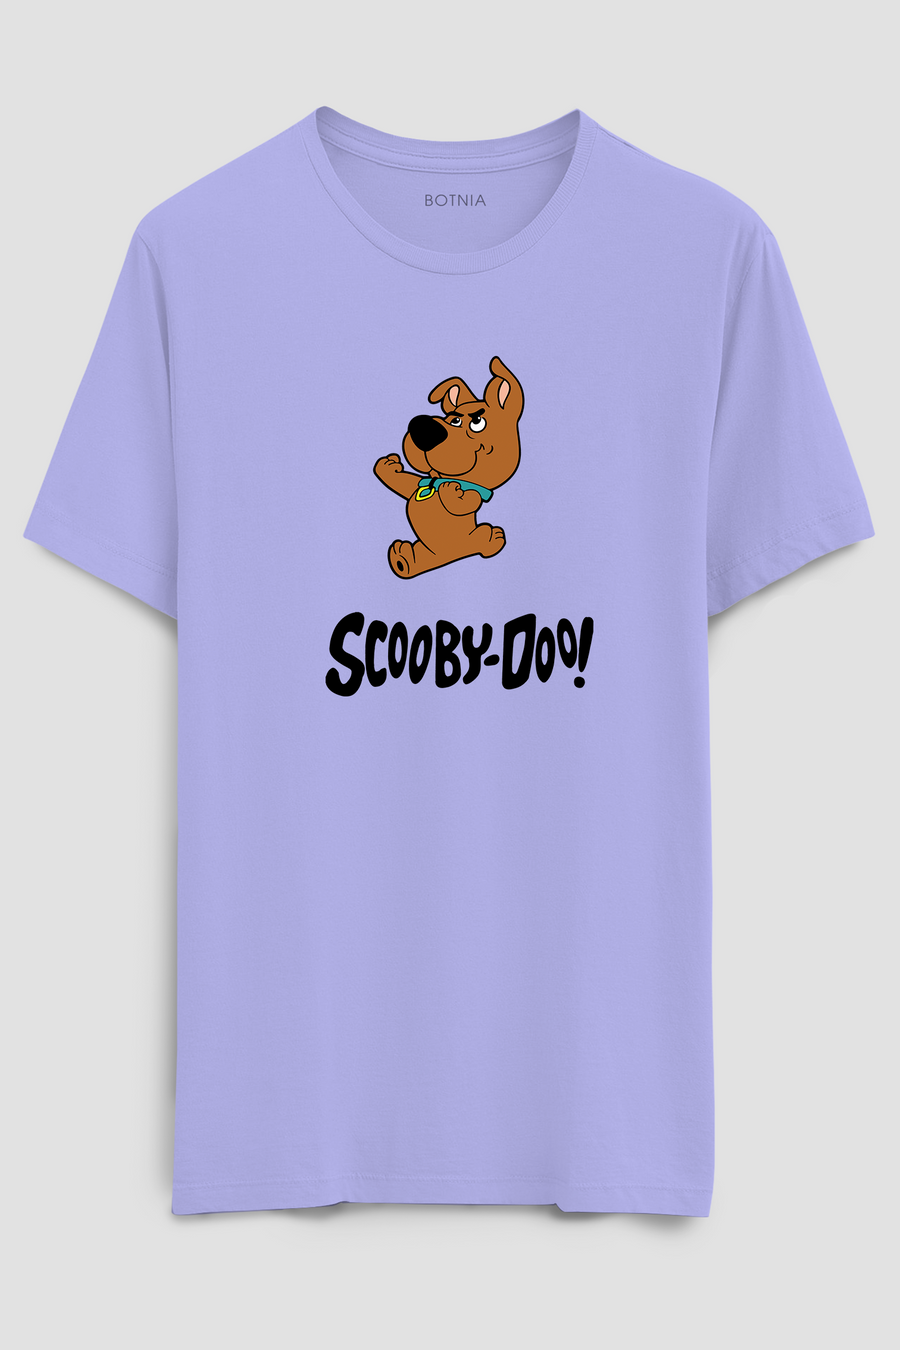 Scooby-Doo! Half sleeve t-shirt - Botnia